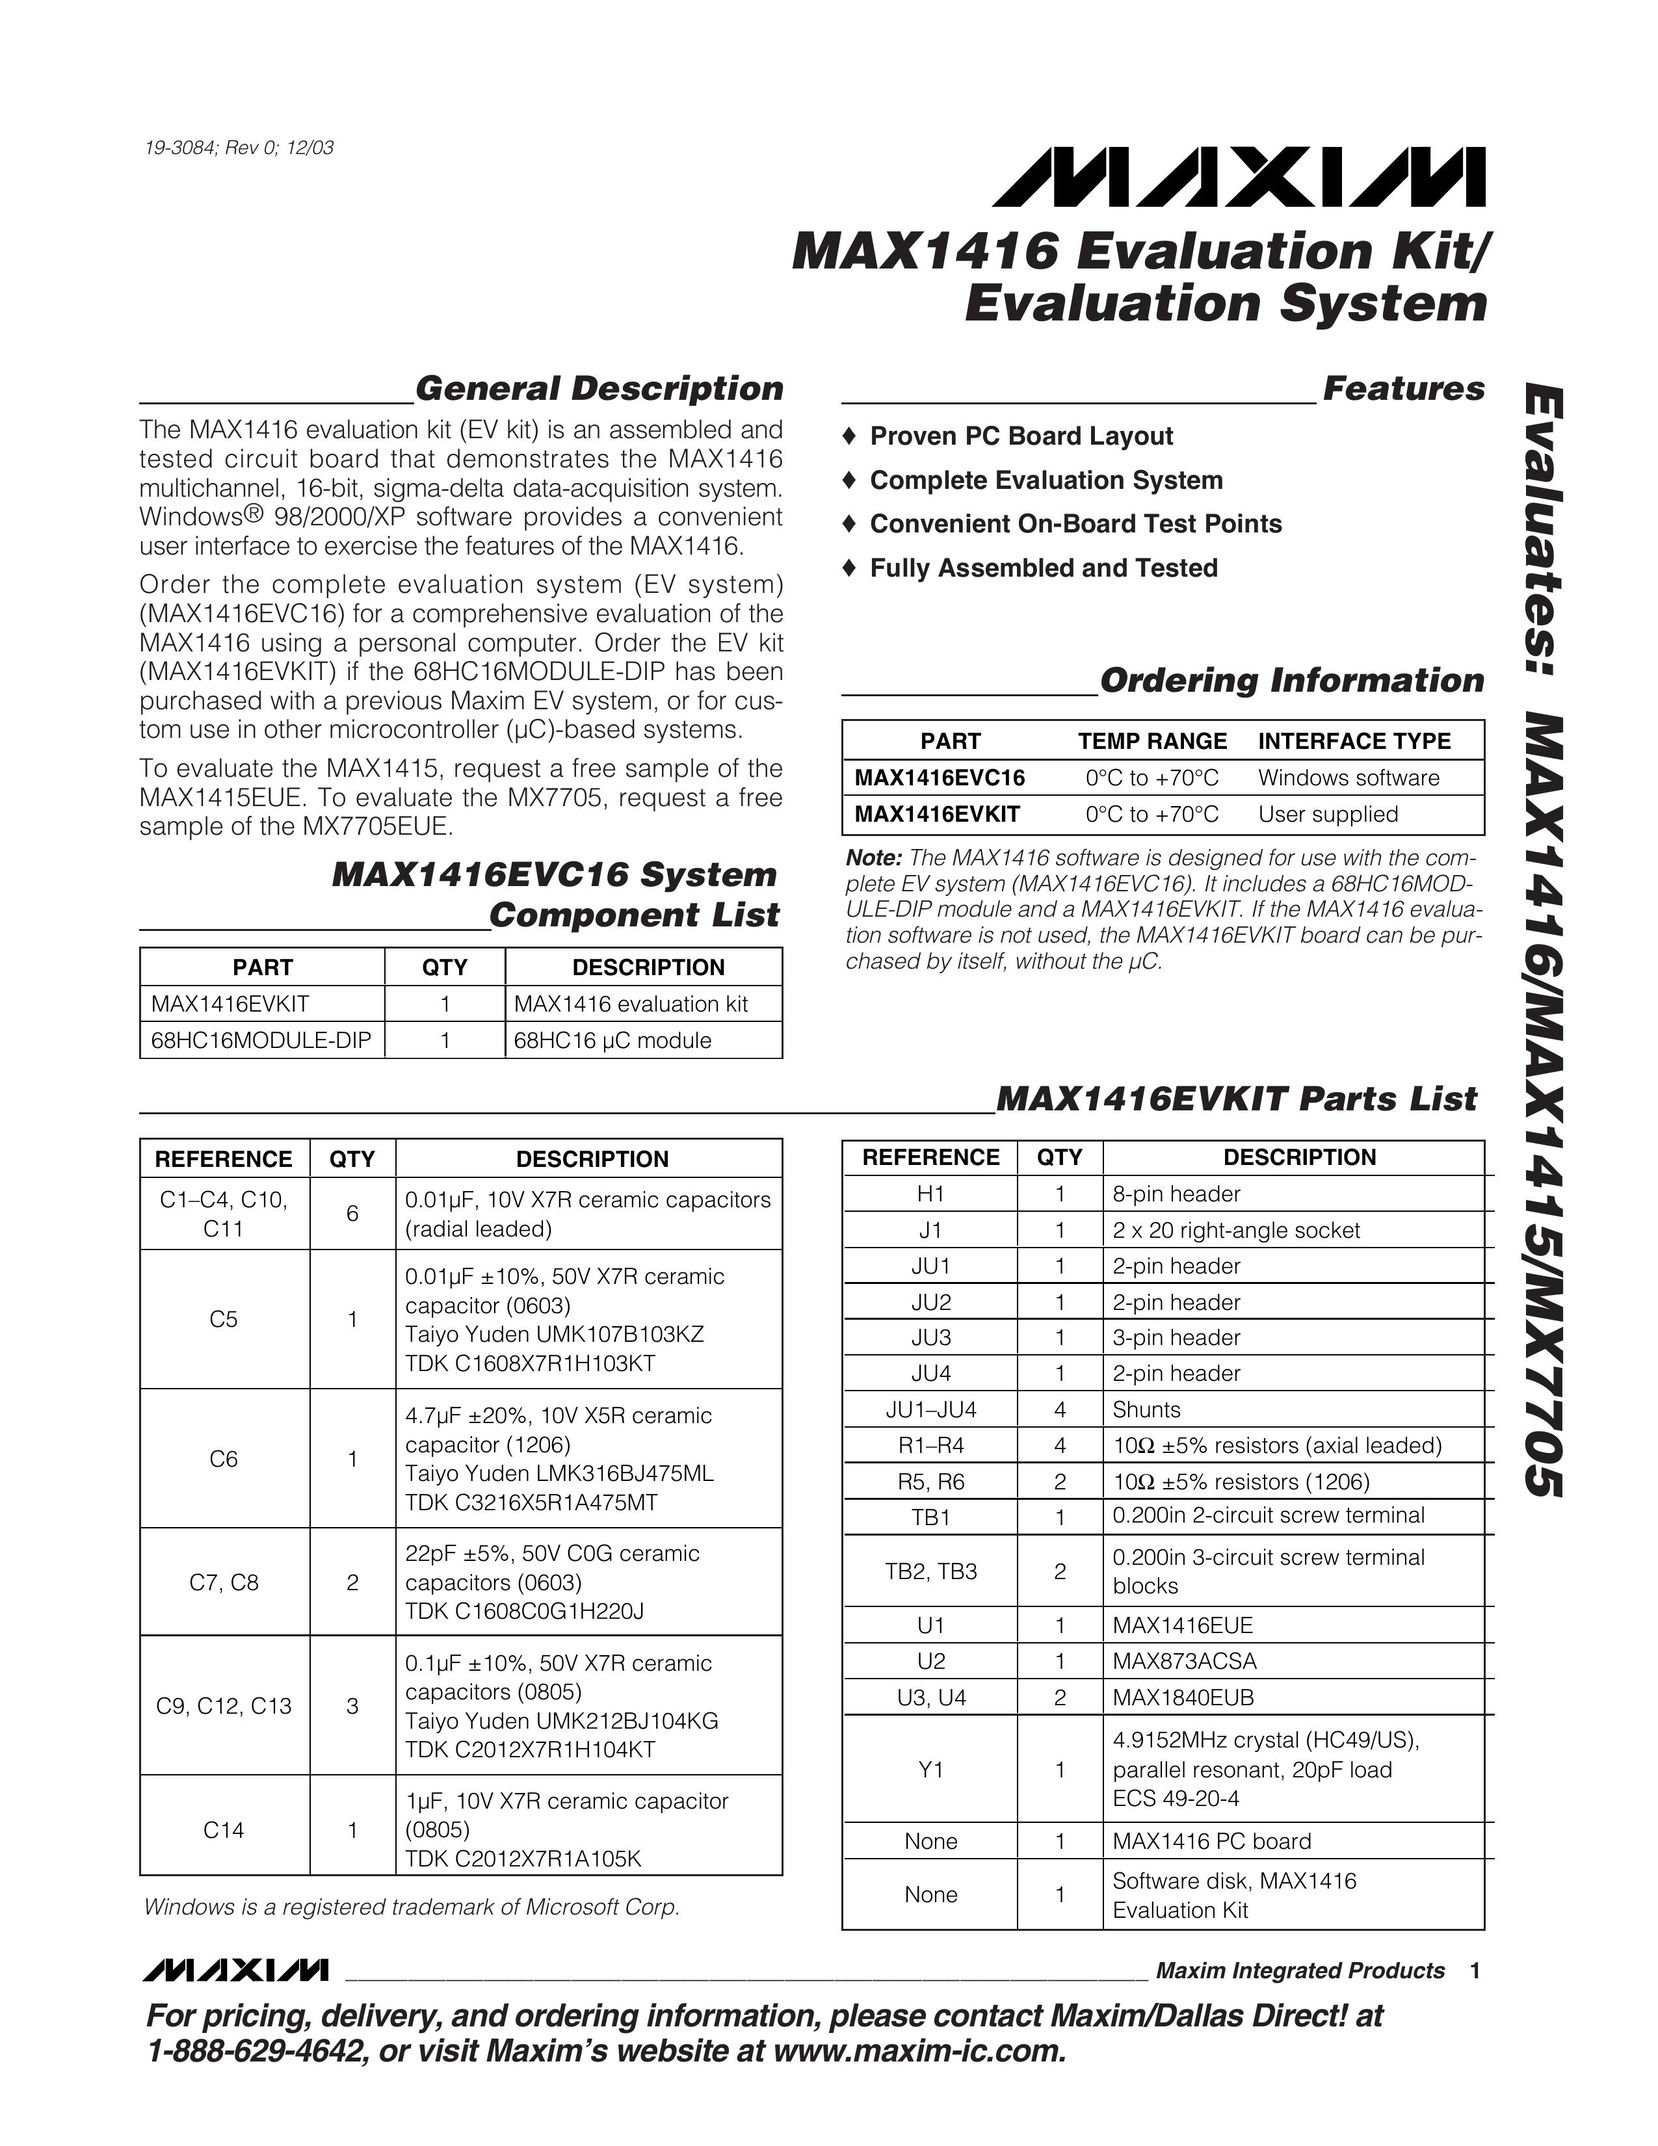 Maxim MAX1416 Computer Hardware User Manual